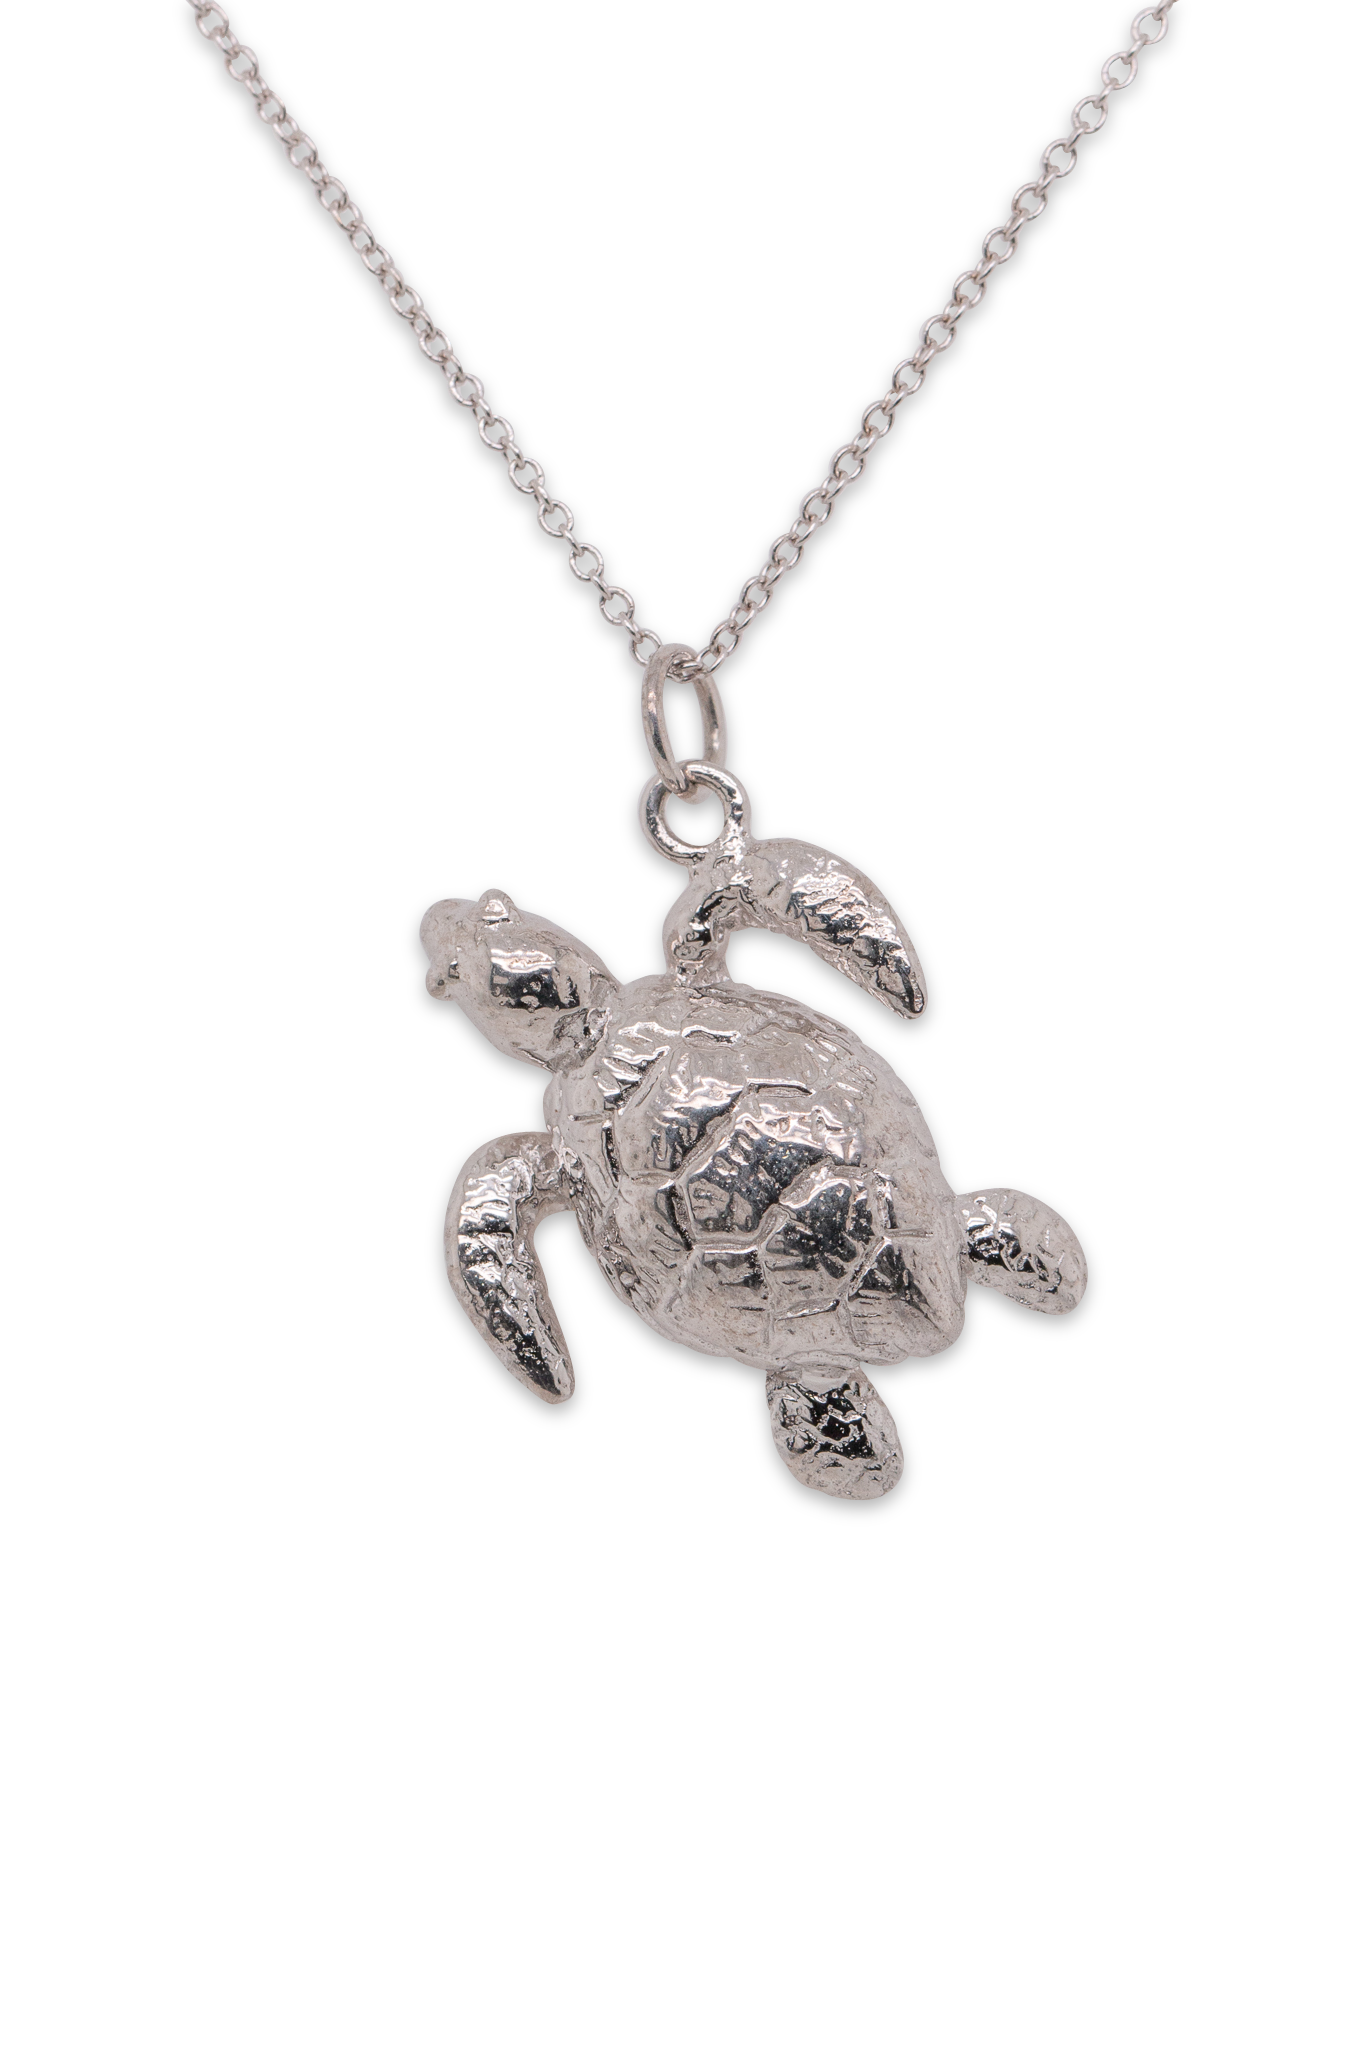 Friends ~ Turtle (Medium) Pendant in Gold - Alexandra Mosher Studio Jewellery Bermuda Fine